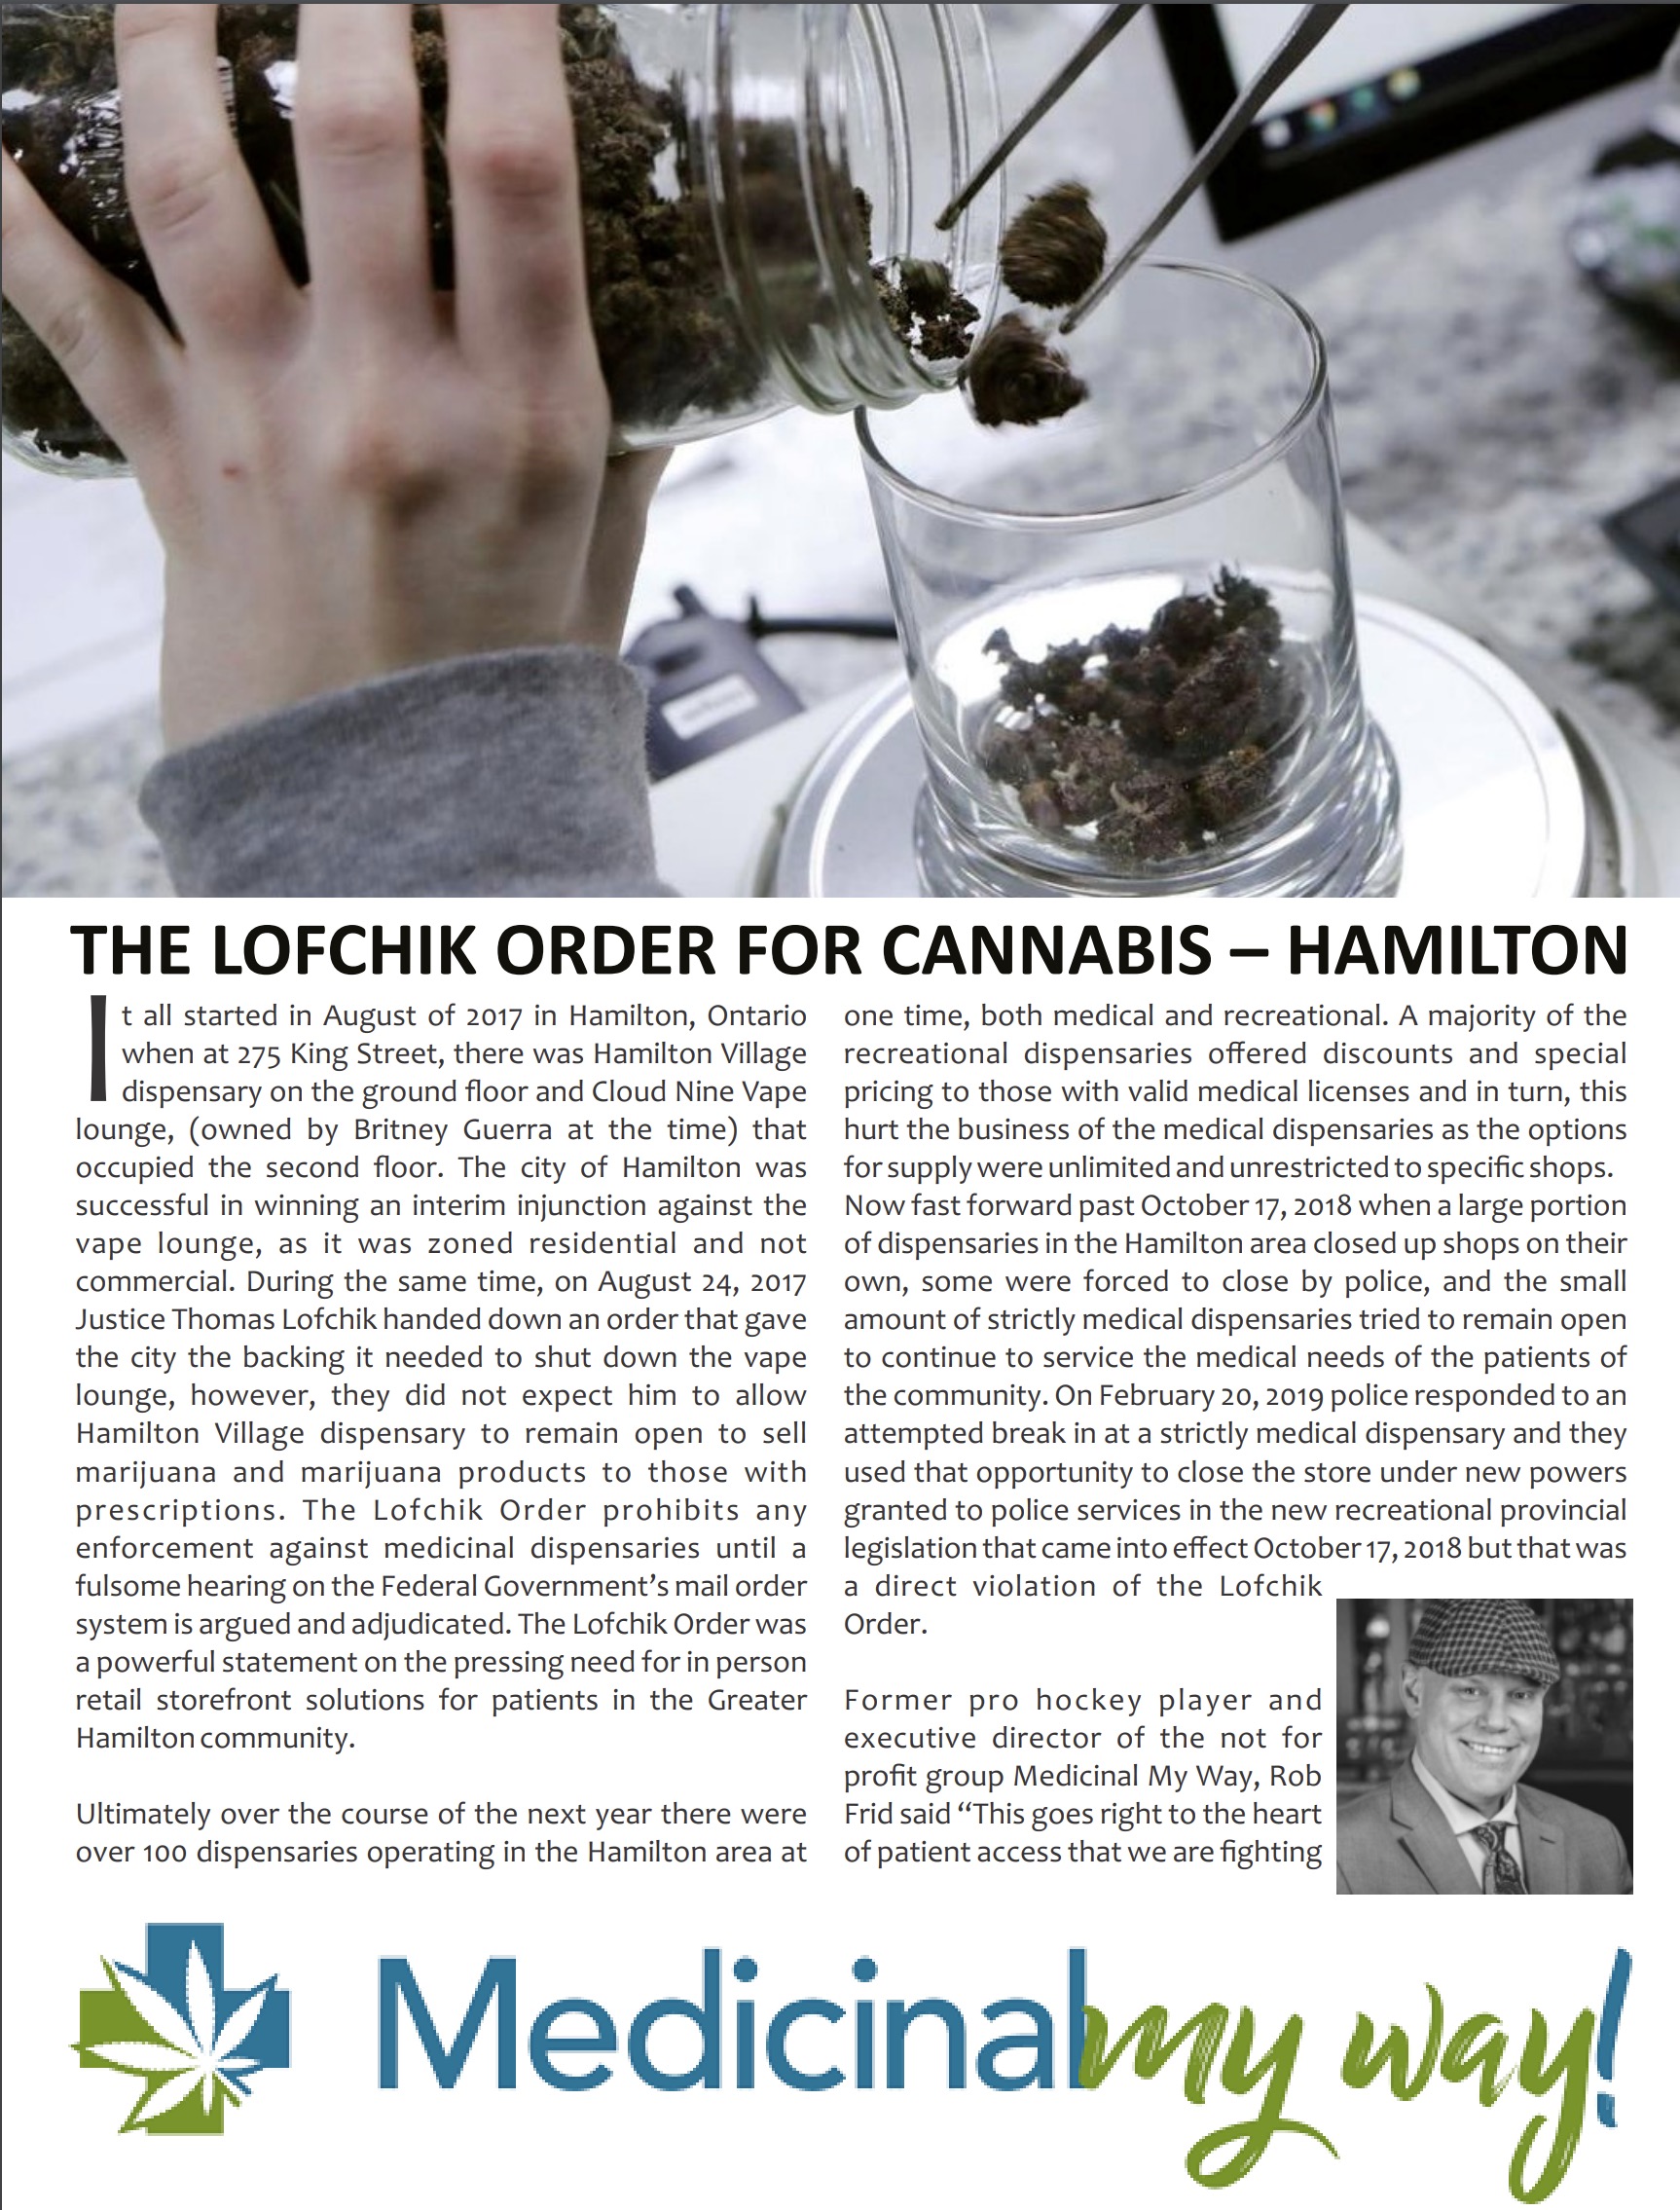 MMW - High Canada Magazine